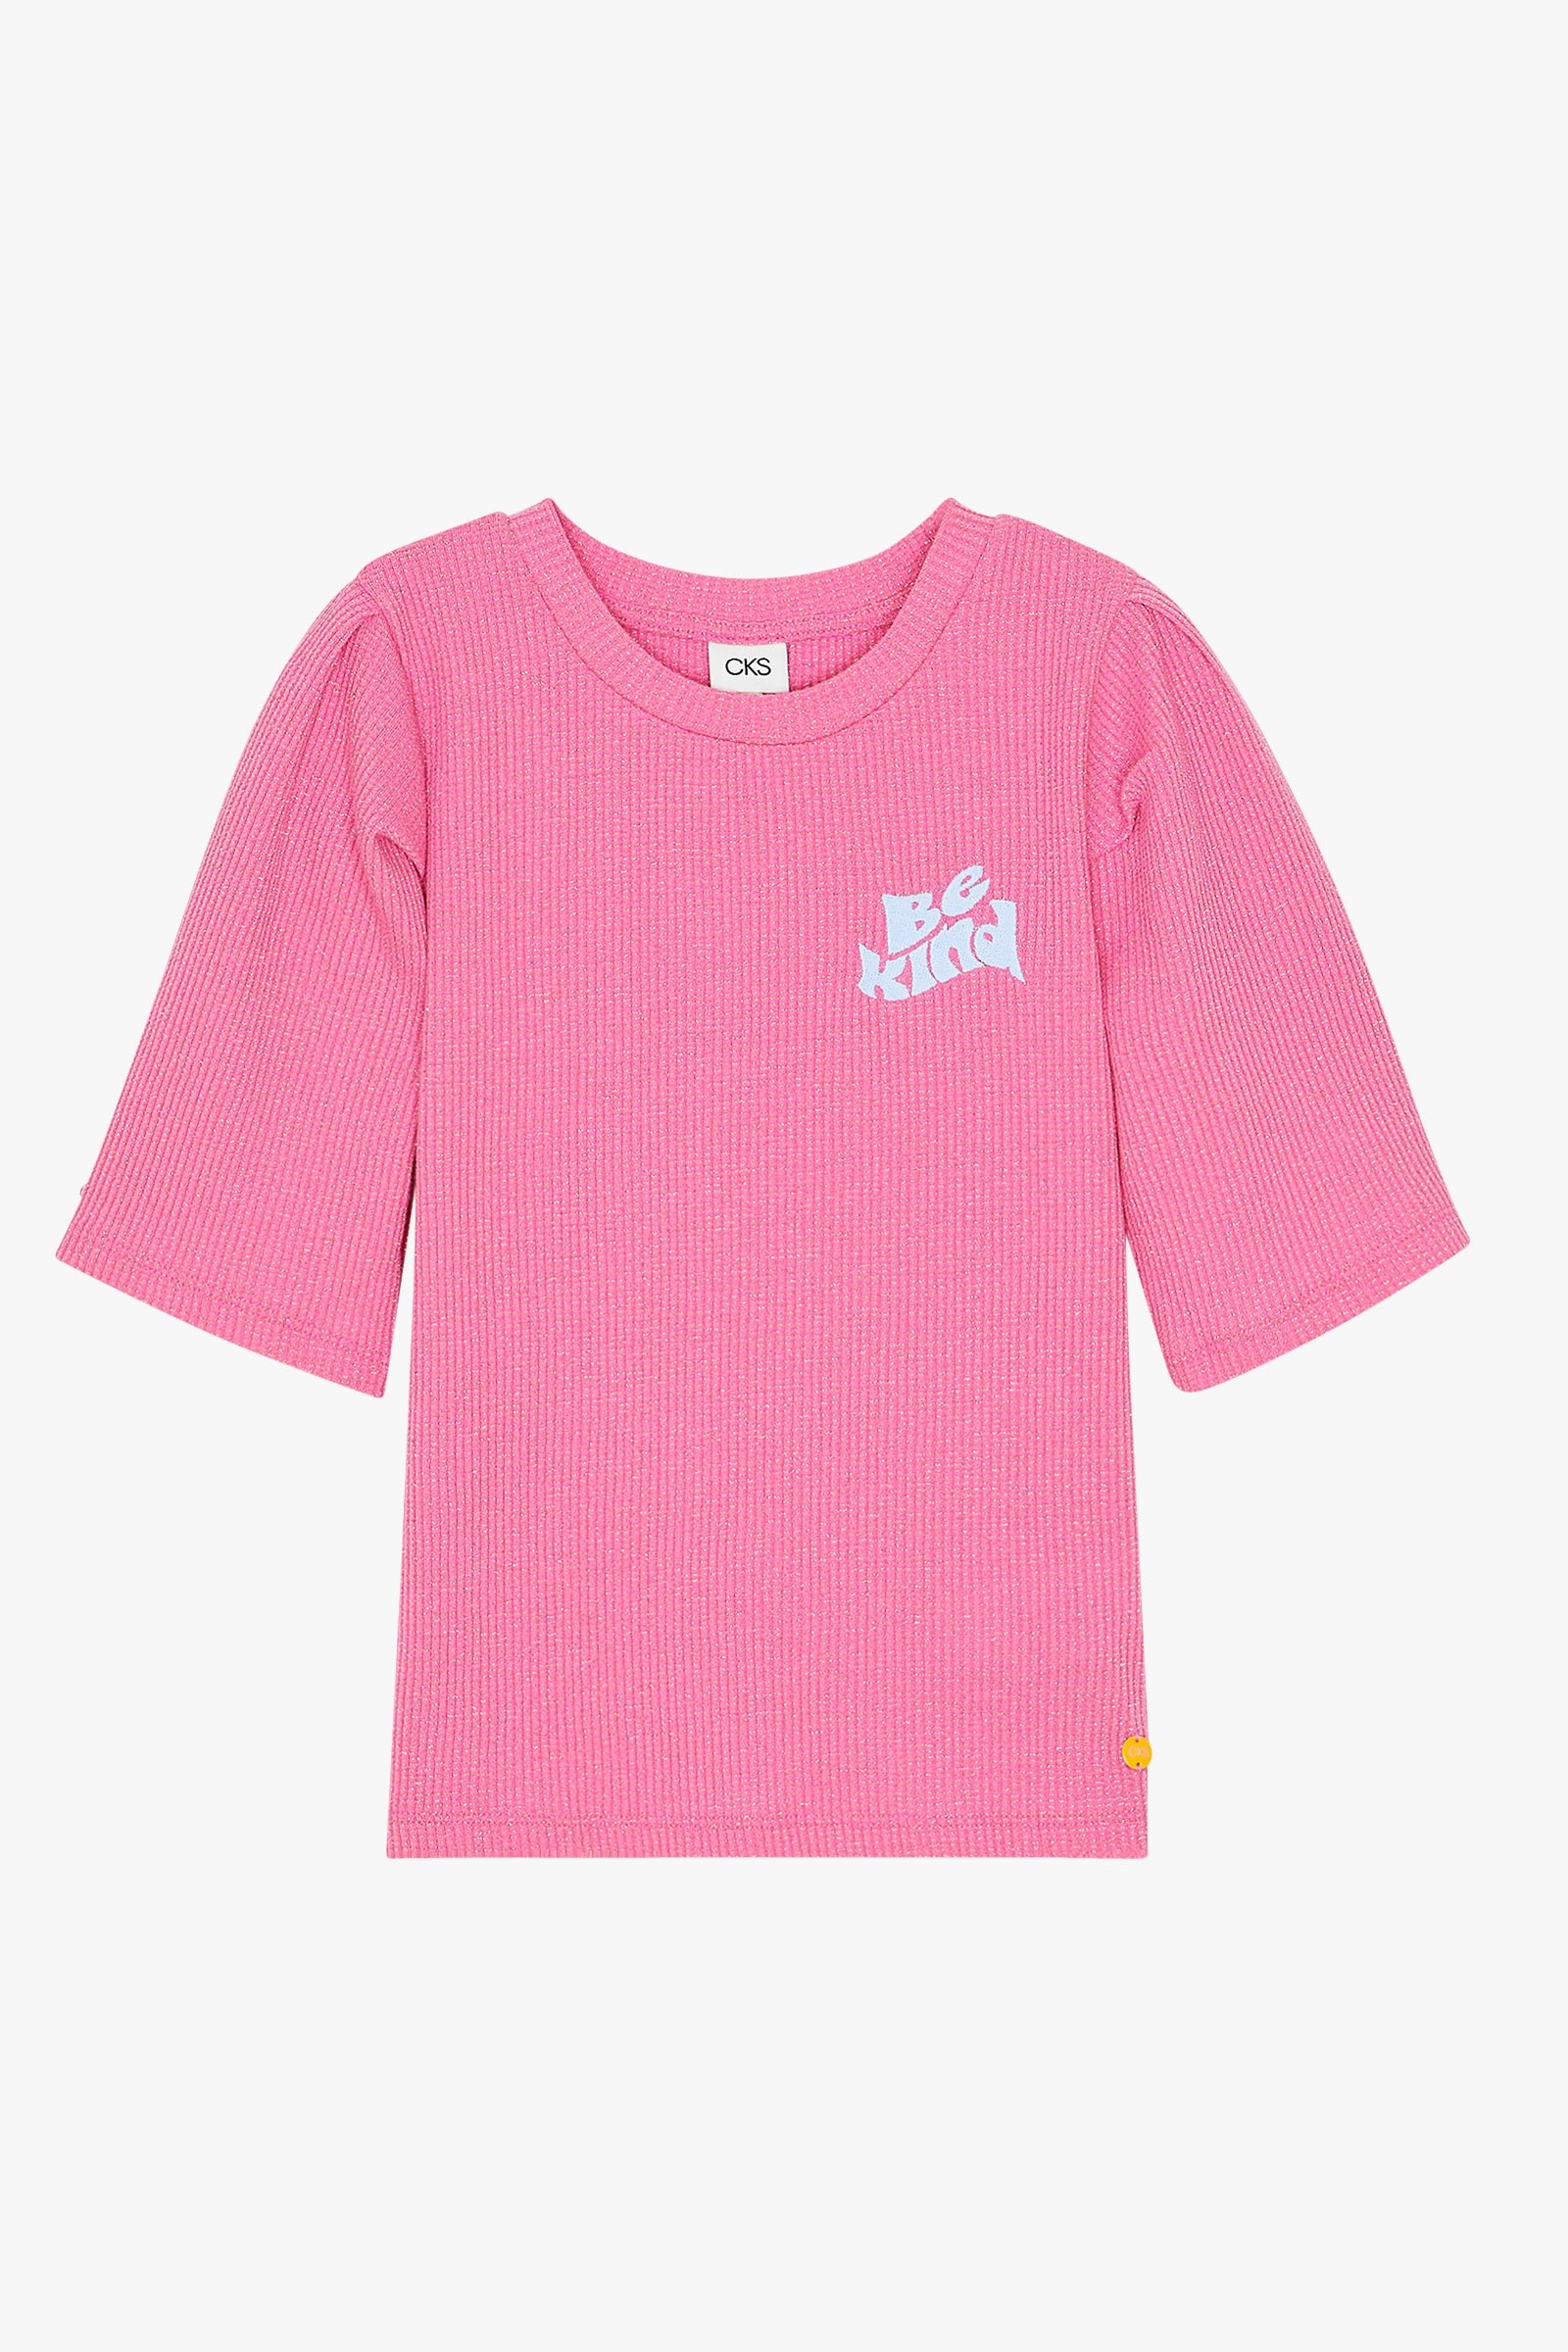 CKS Kids - ESIS - T-Shirt Kurzarm - Hellrosa